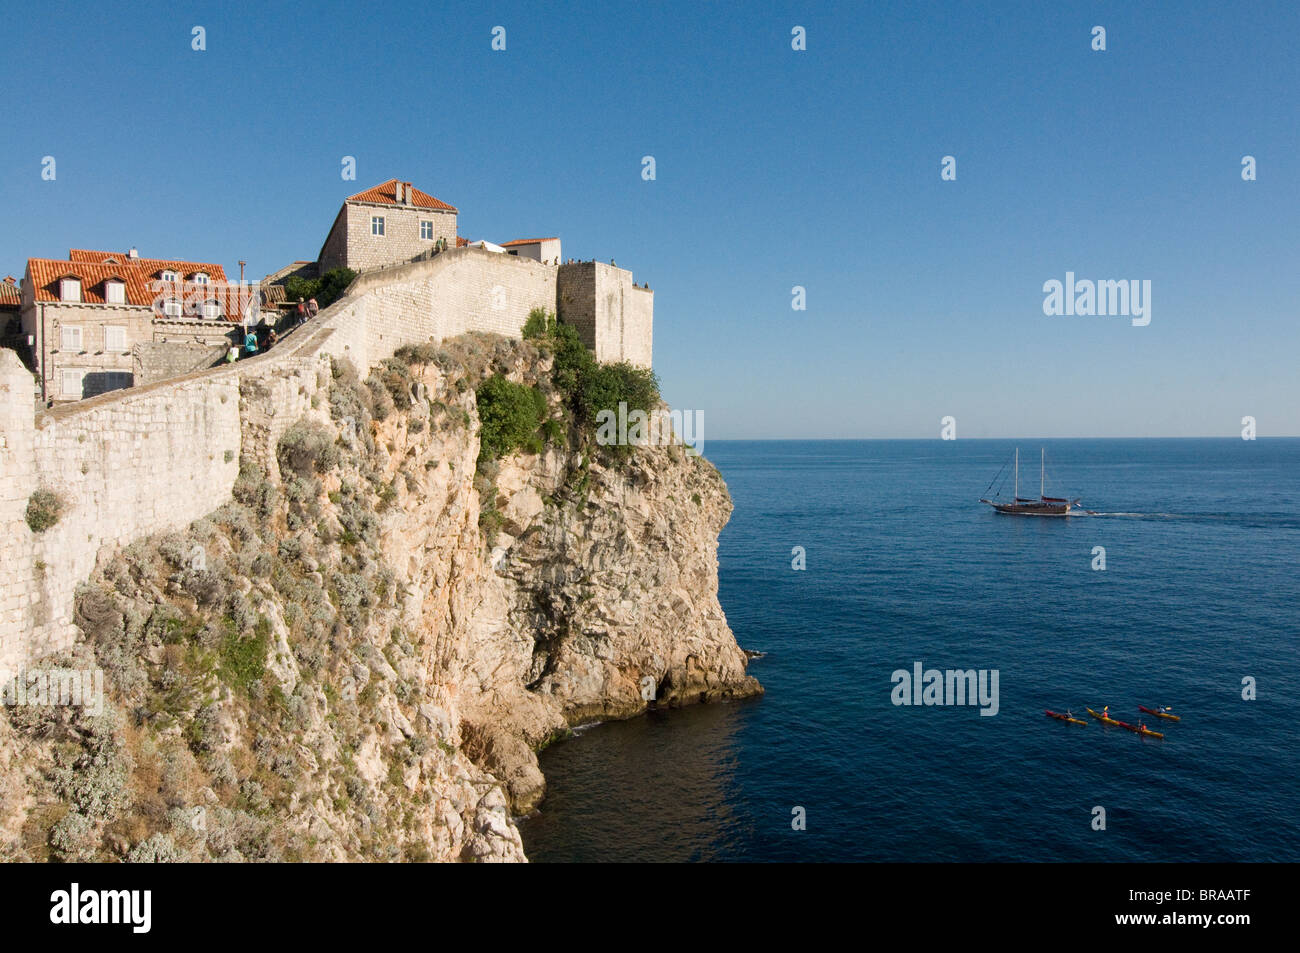 The city wall of Dubrovnik above the Mediterranean Sea, Croatia, Europe Stock Photo